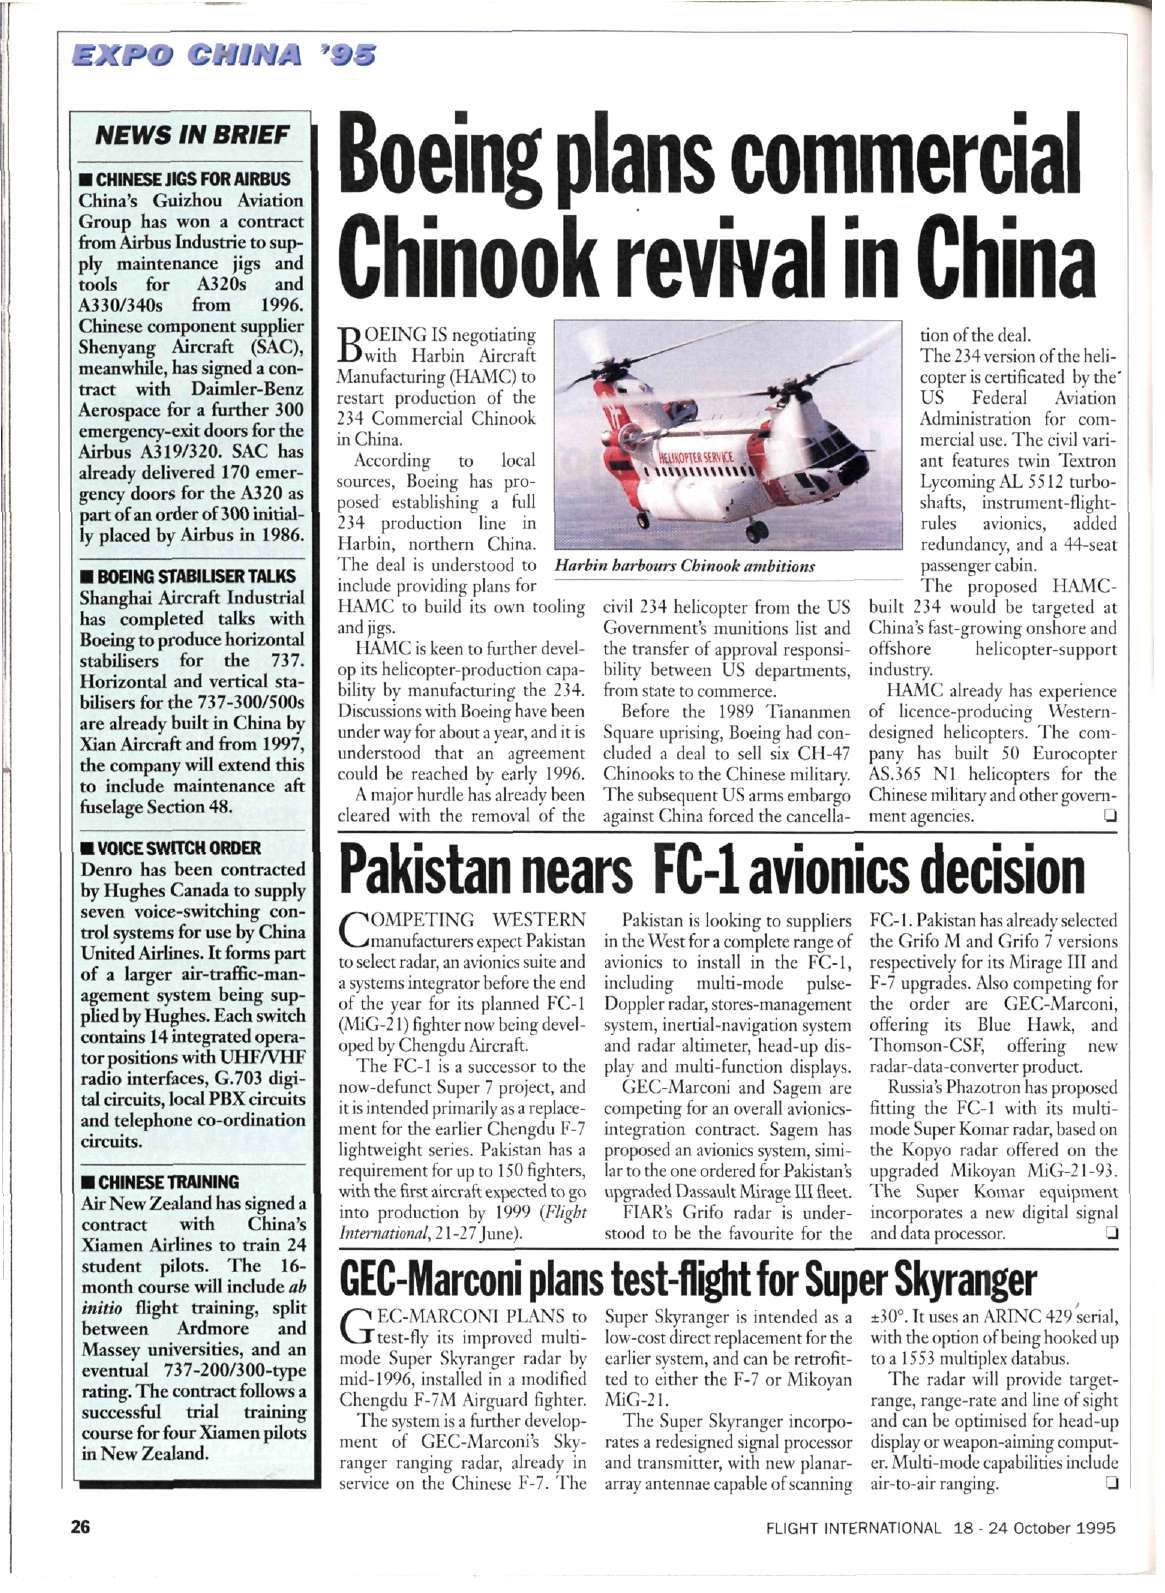 Pakistan nears FC-1 avionics decision  1995 - 2983.jpg